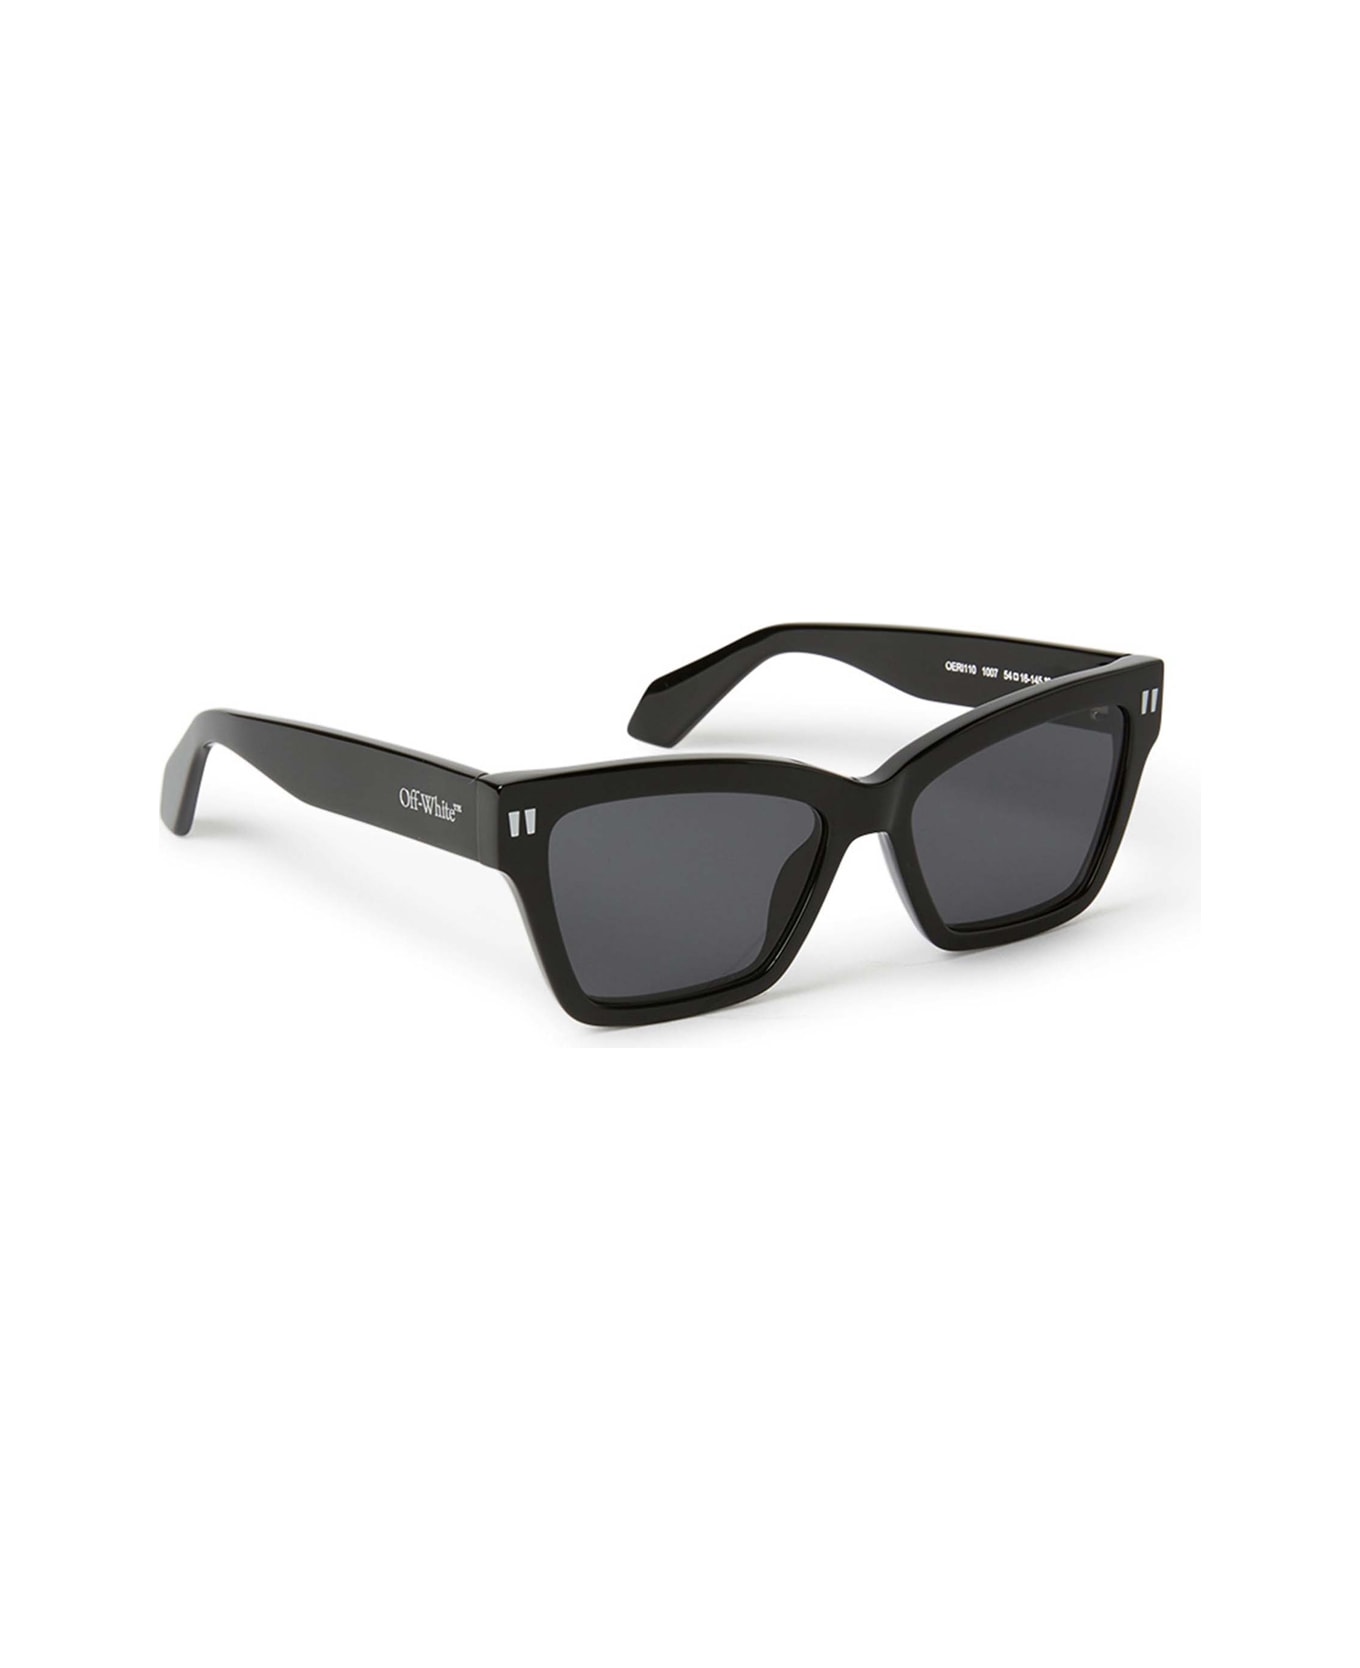 Off-White Oeri110 Cincinnati 1007 Black Sunglasses - Nero サングラス